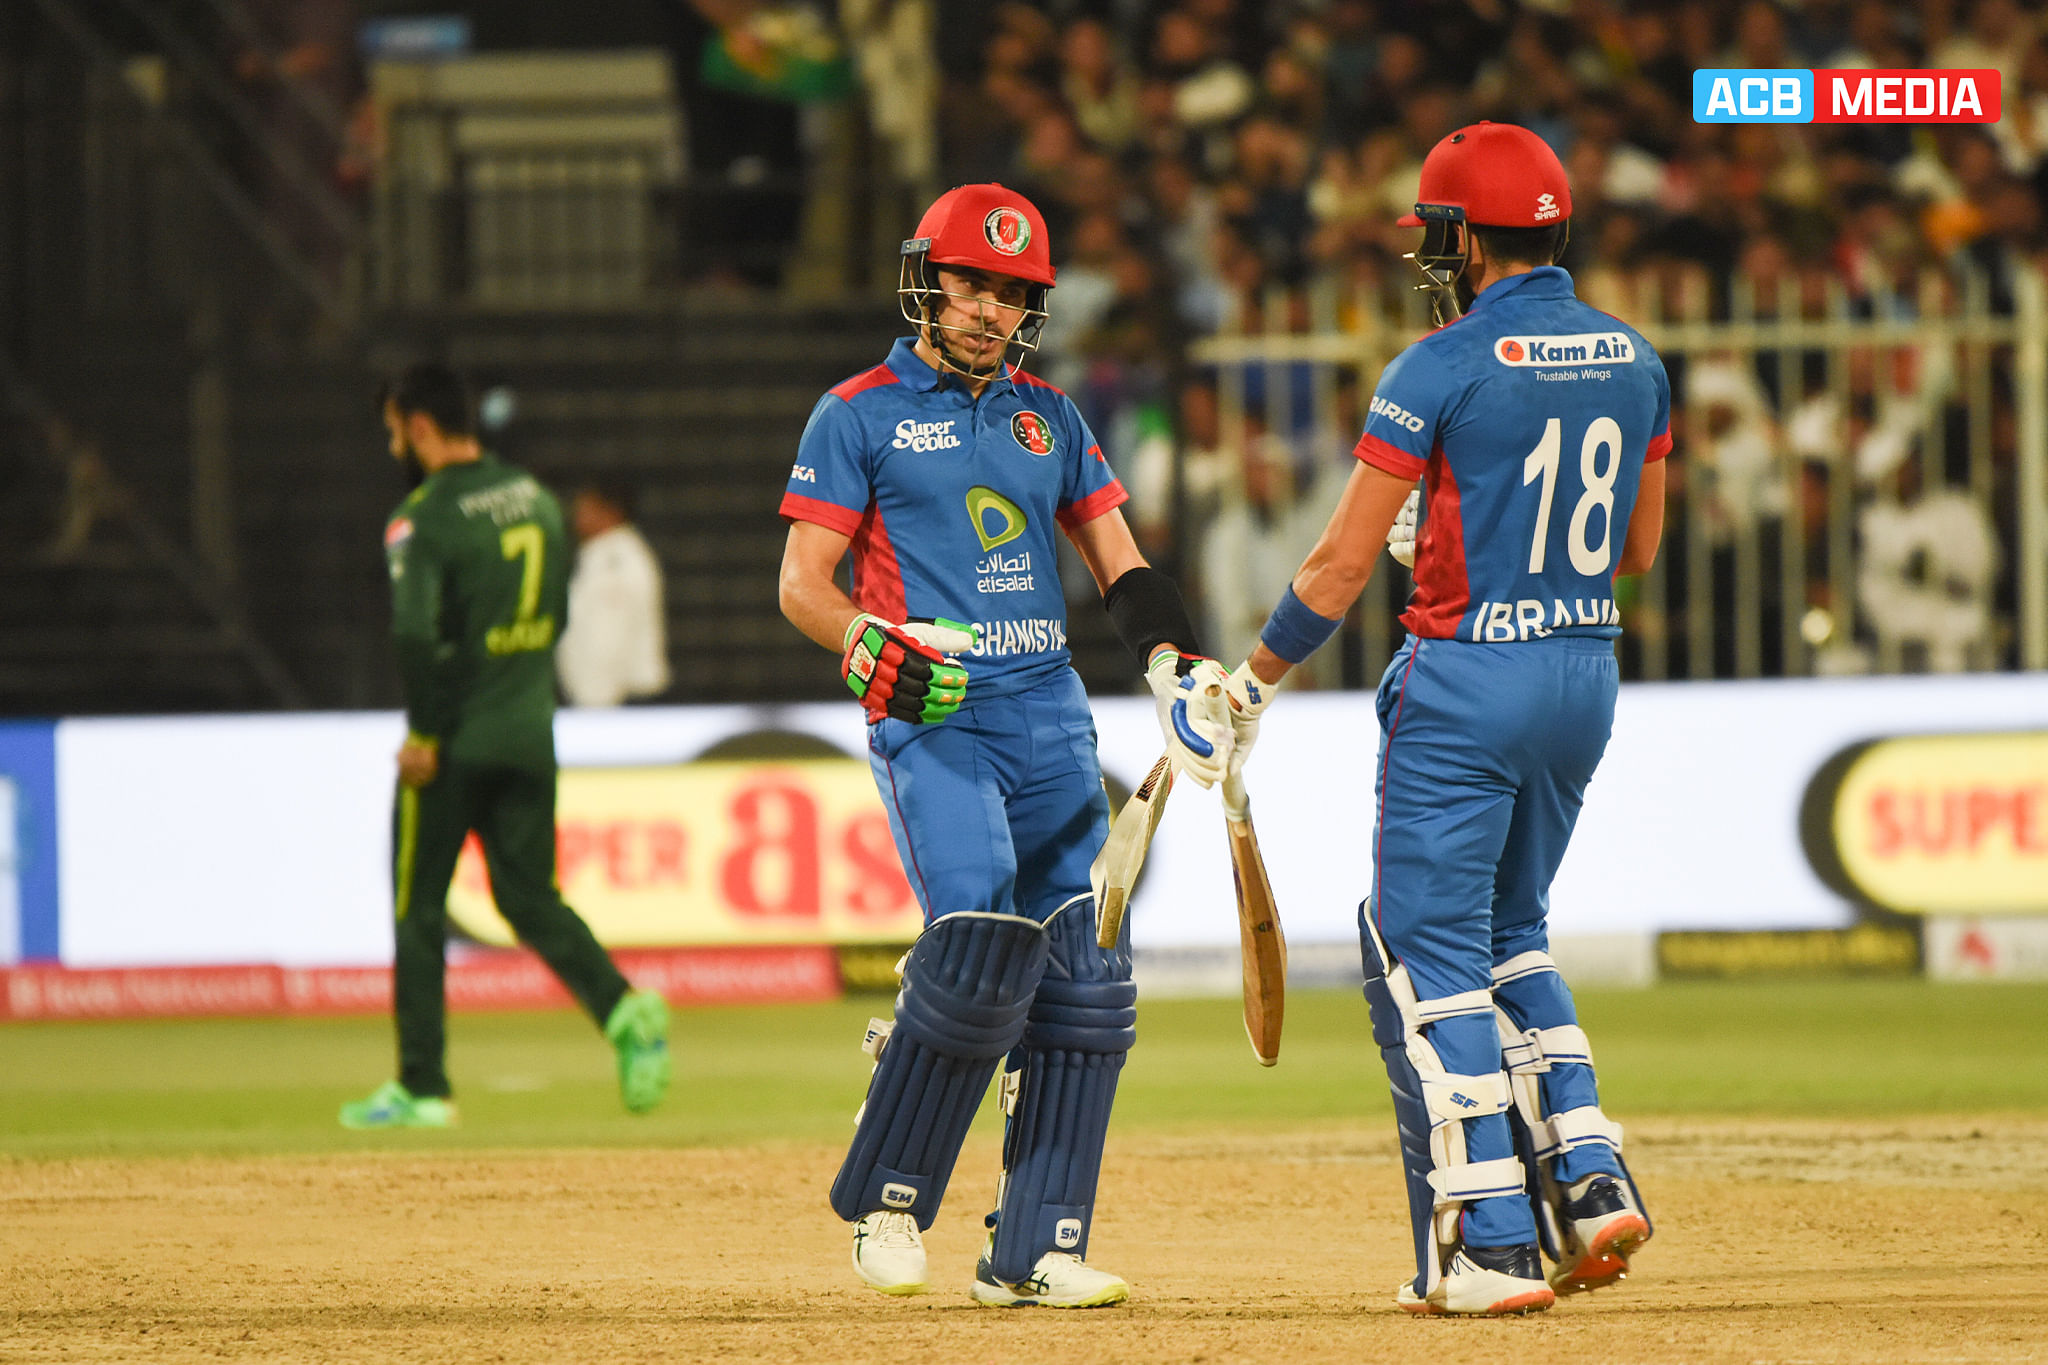 Nabi stars as Afghanistan stun Pakistan in T20 series opener | The Daily Star